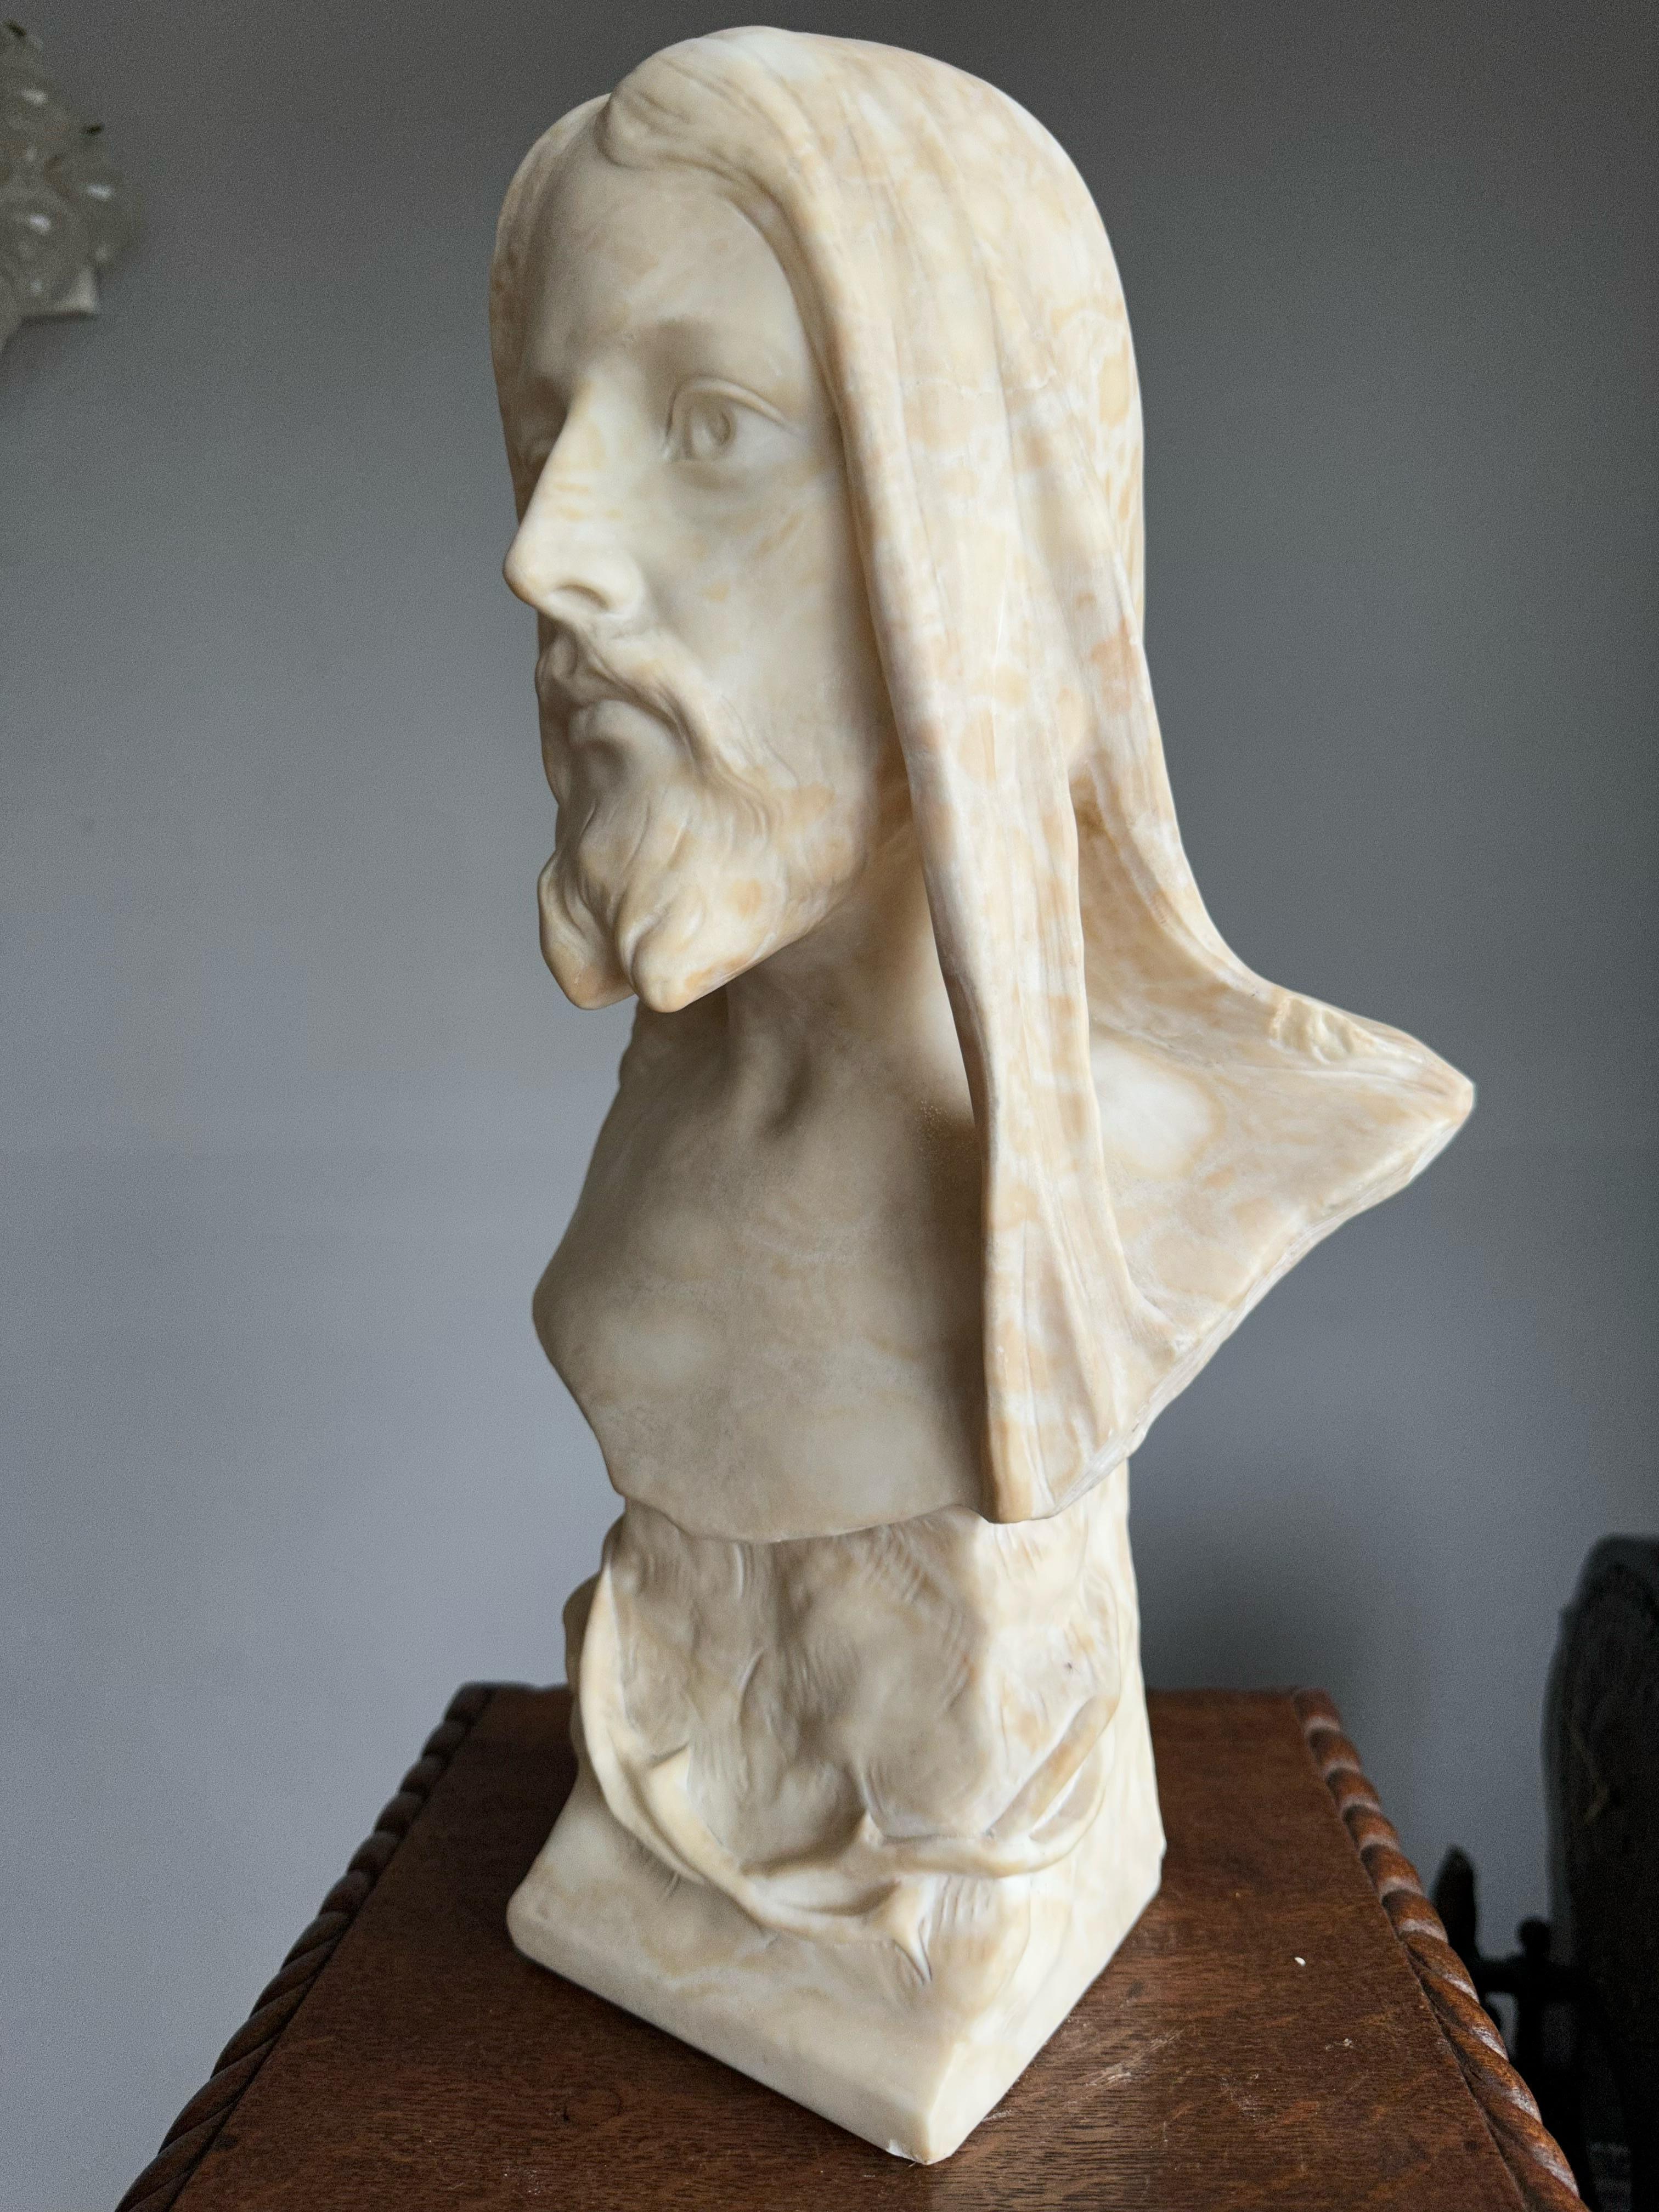 Antique, Early 1900 Large Hand Carved Alabaster Sculpture / Bust of Jesus Christ For Sale 3